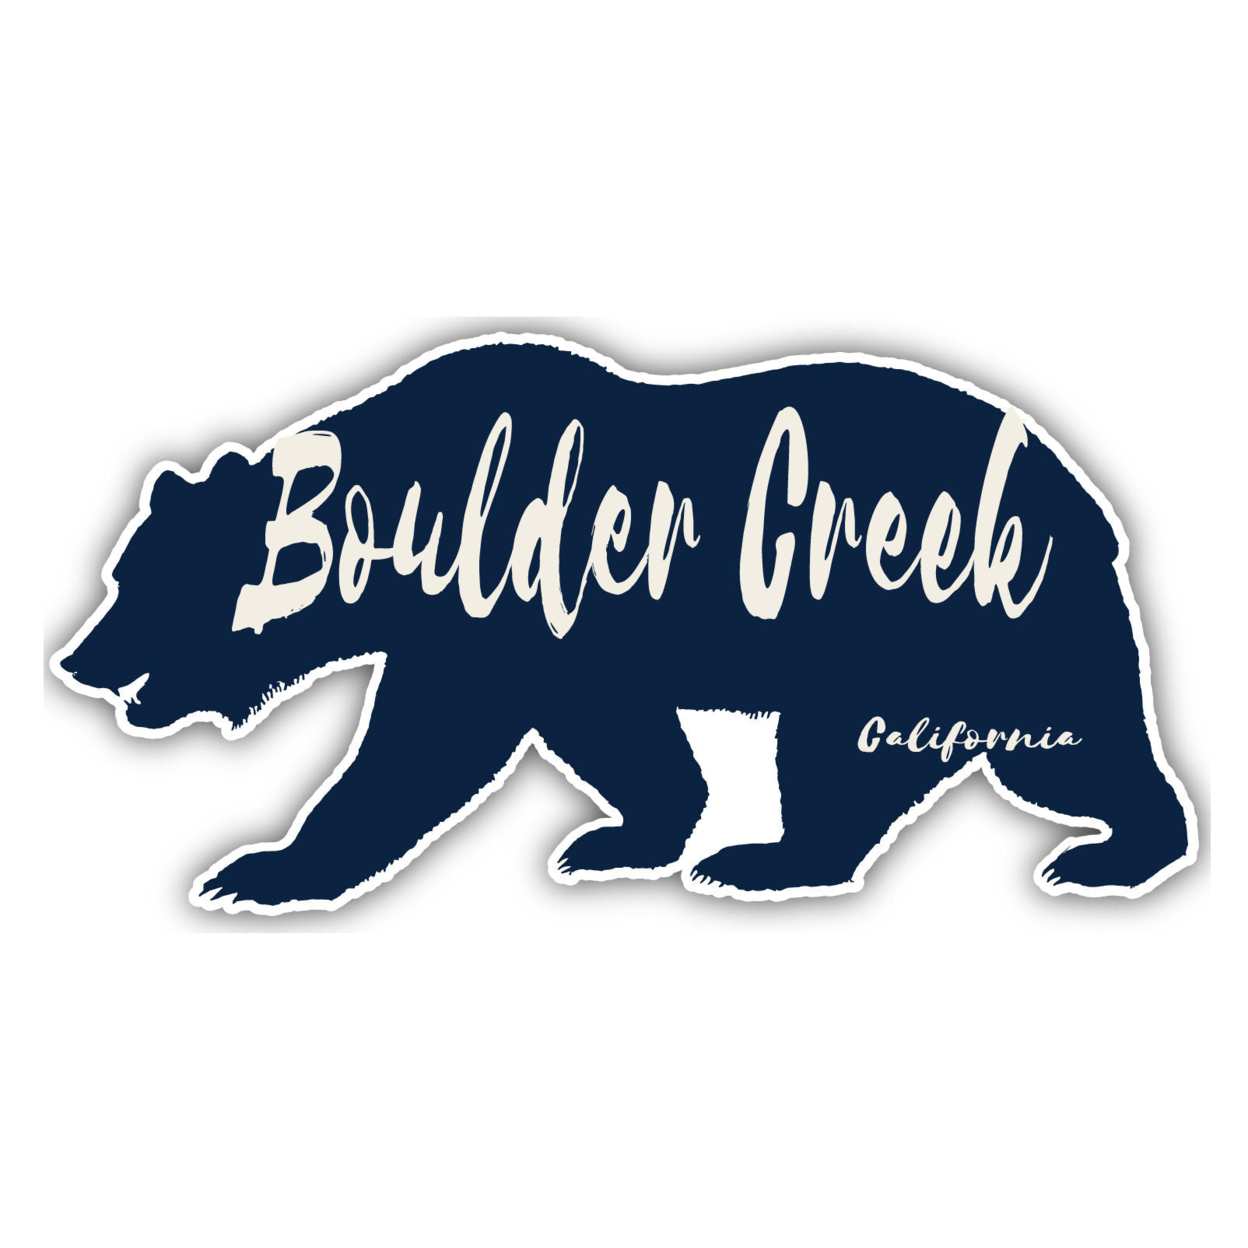 Boulder Creek California Souvenir Decorative Stickers (Choose Theme And Size) - 4-Pack, 4-Inch, Bear